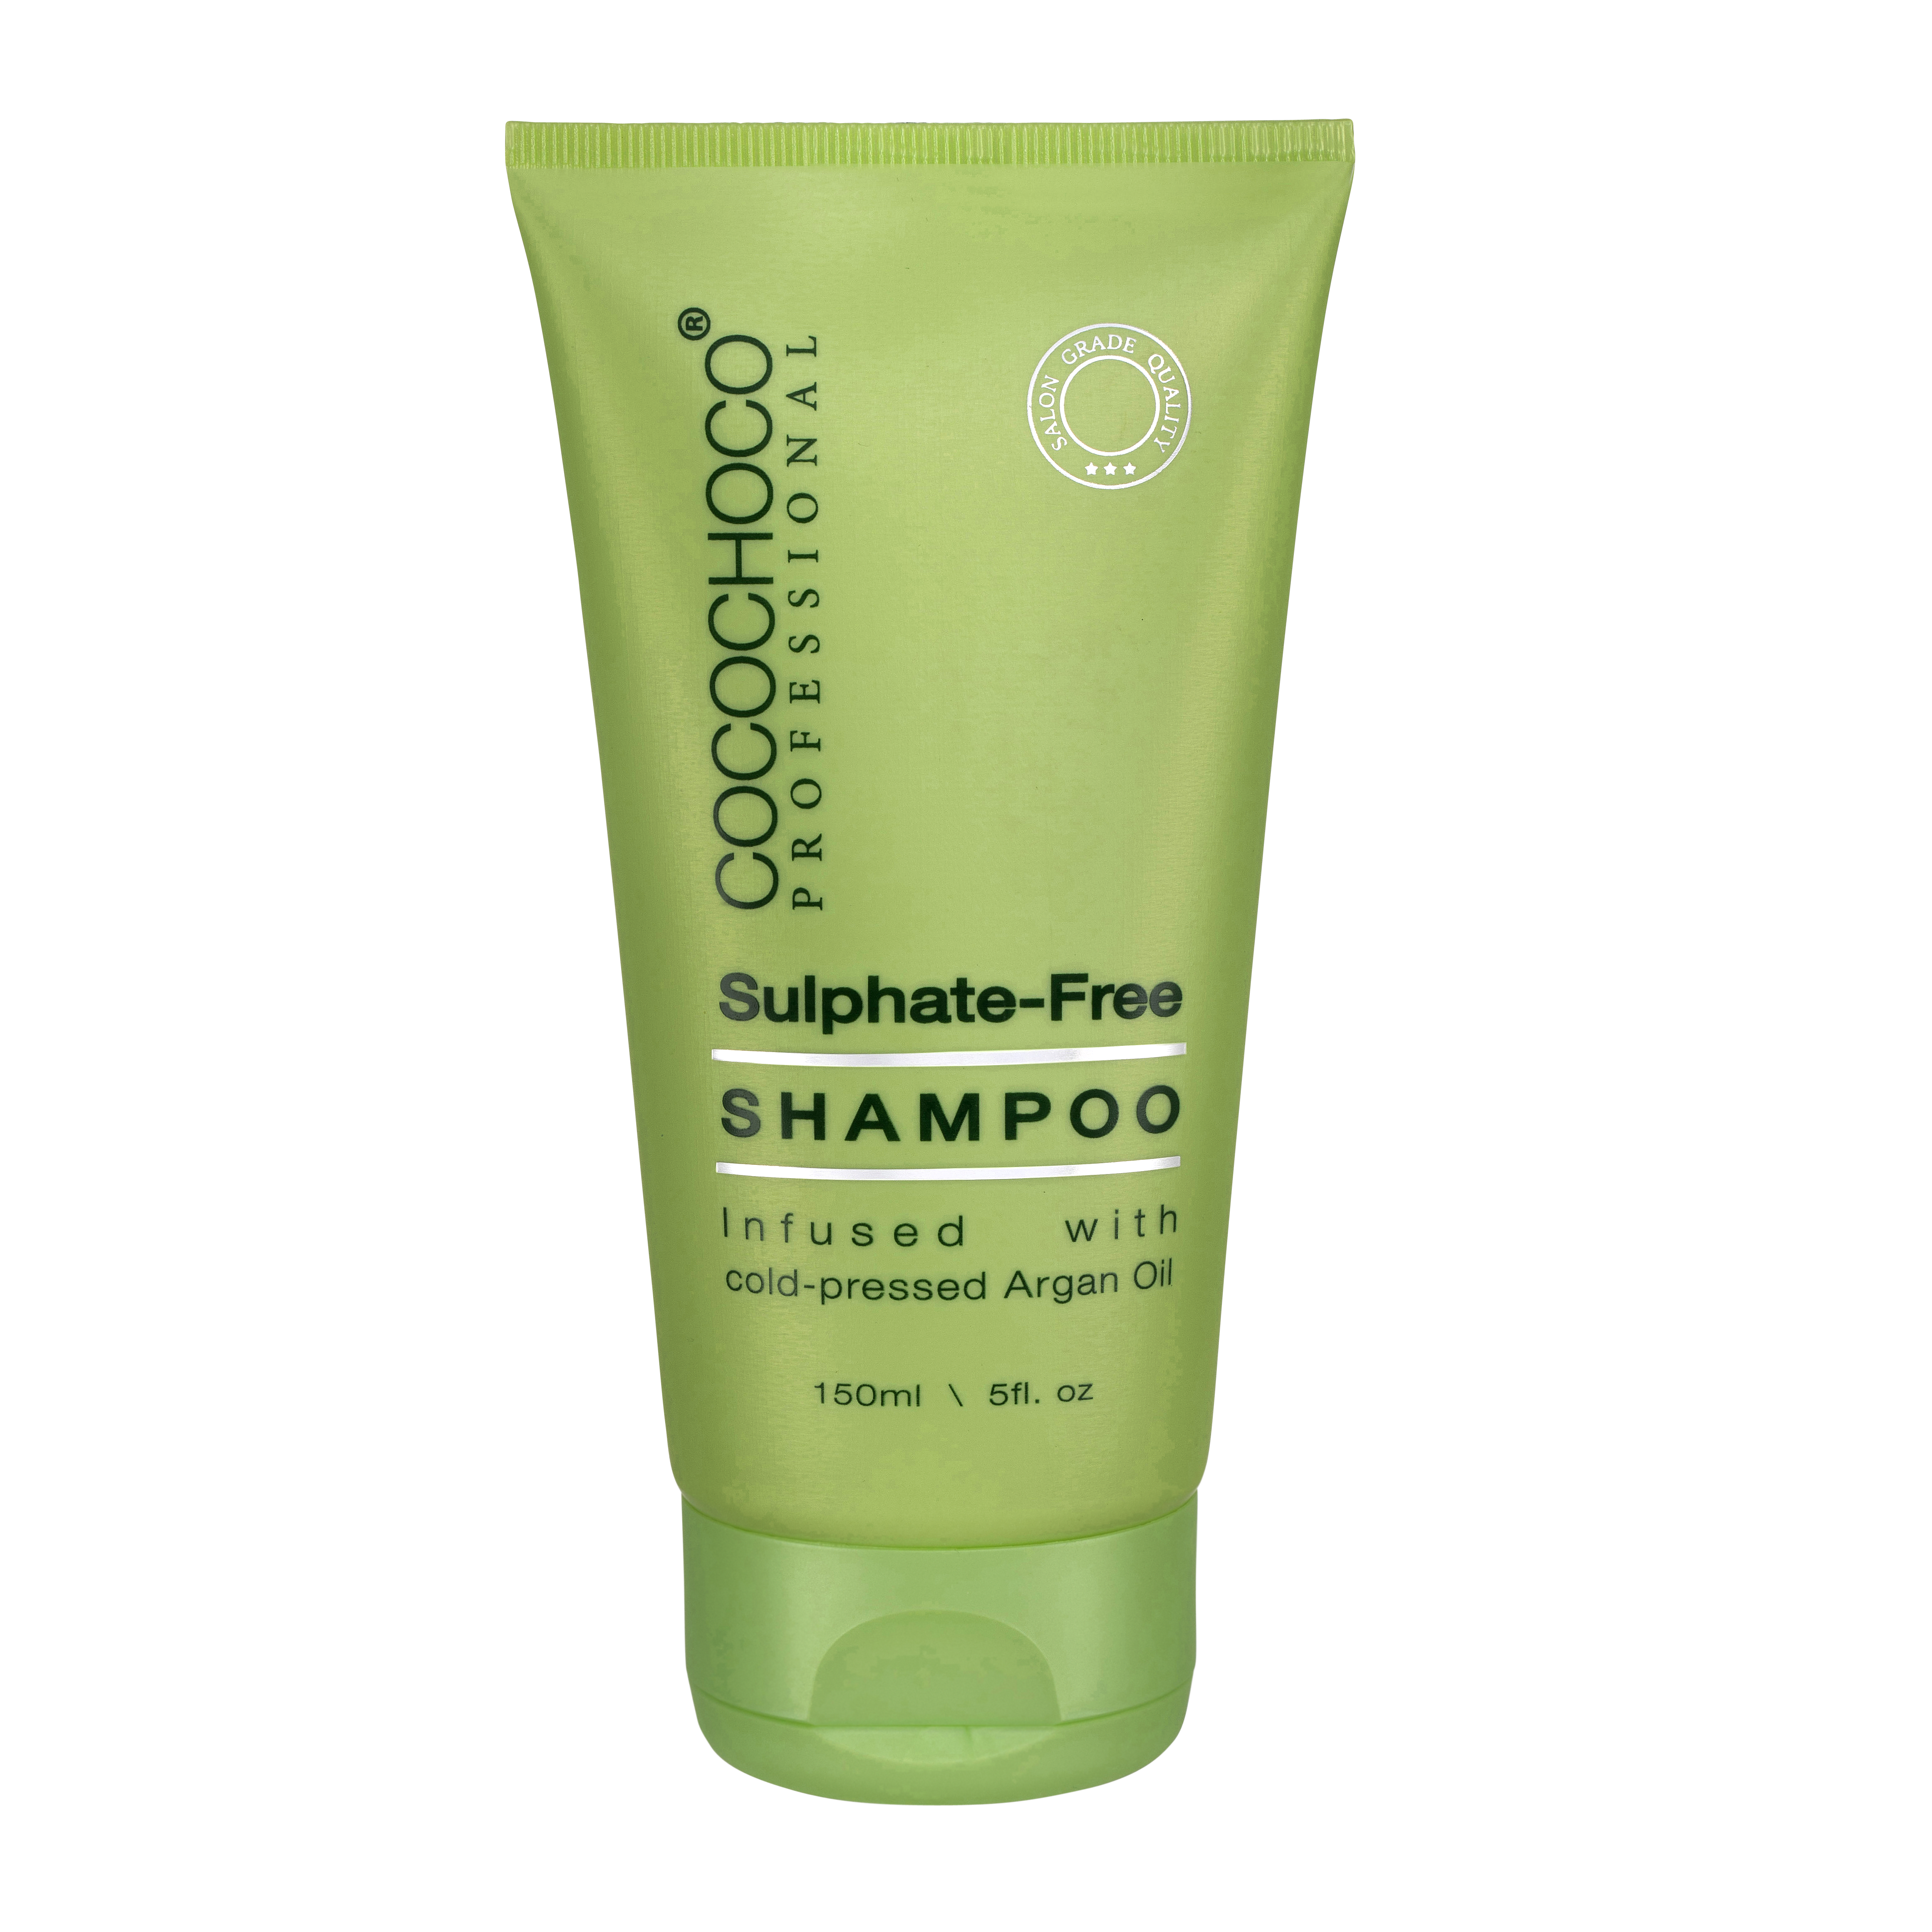 cocochoco szampon sulphate free 150 ml